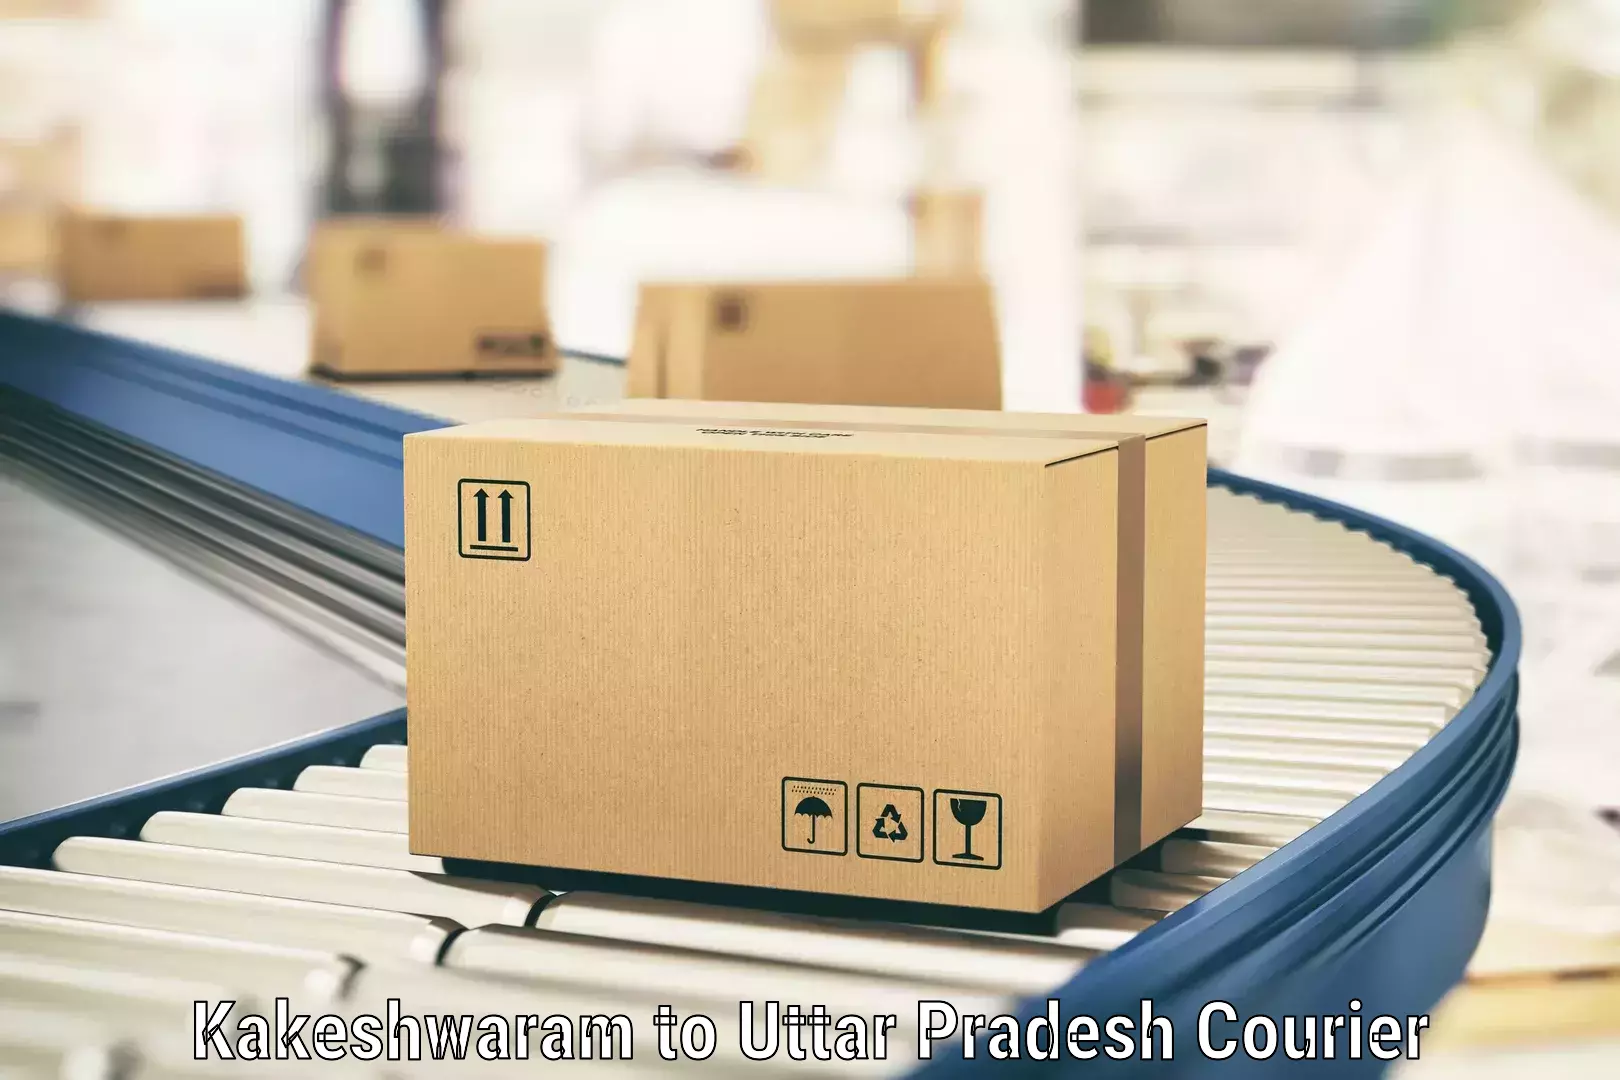 Supply chain delivery Kakeshwaram to Anupshahar